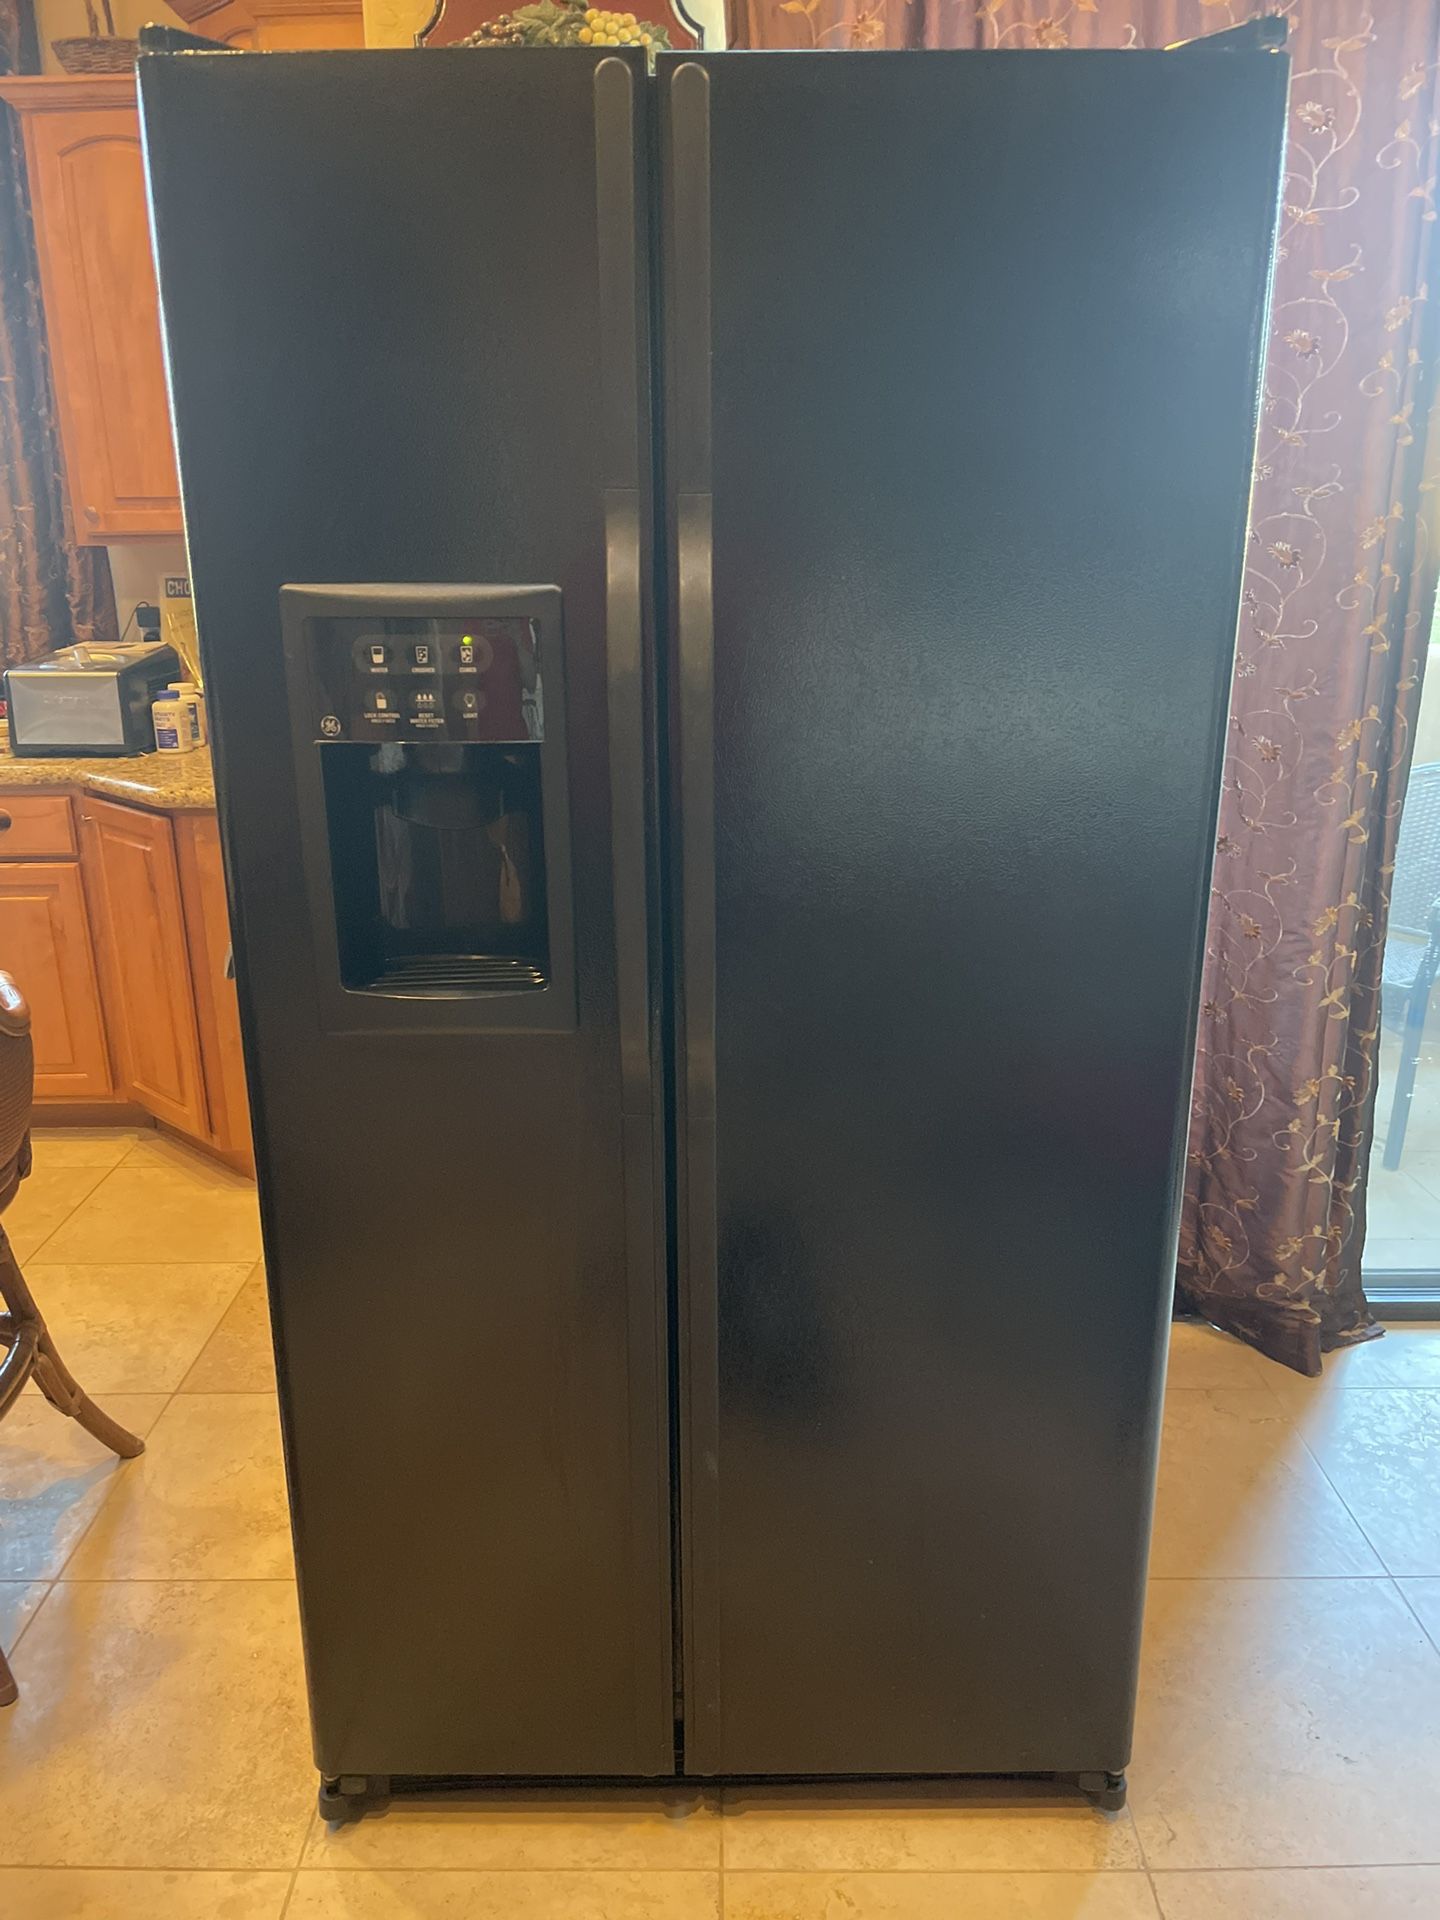 GE Side-by-Side Refrigerator (black)